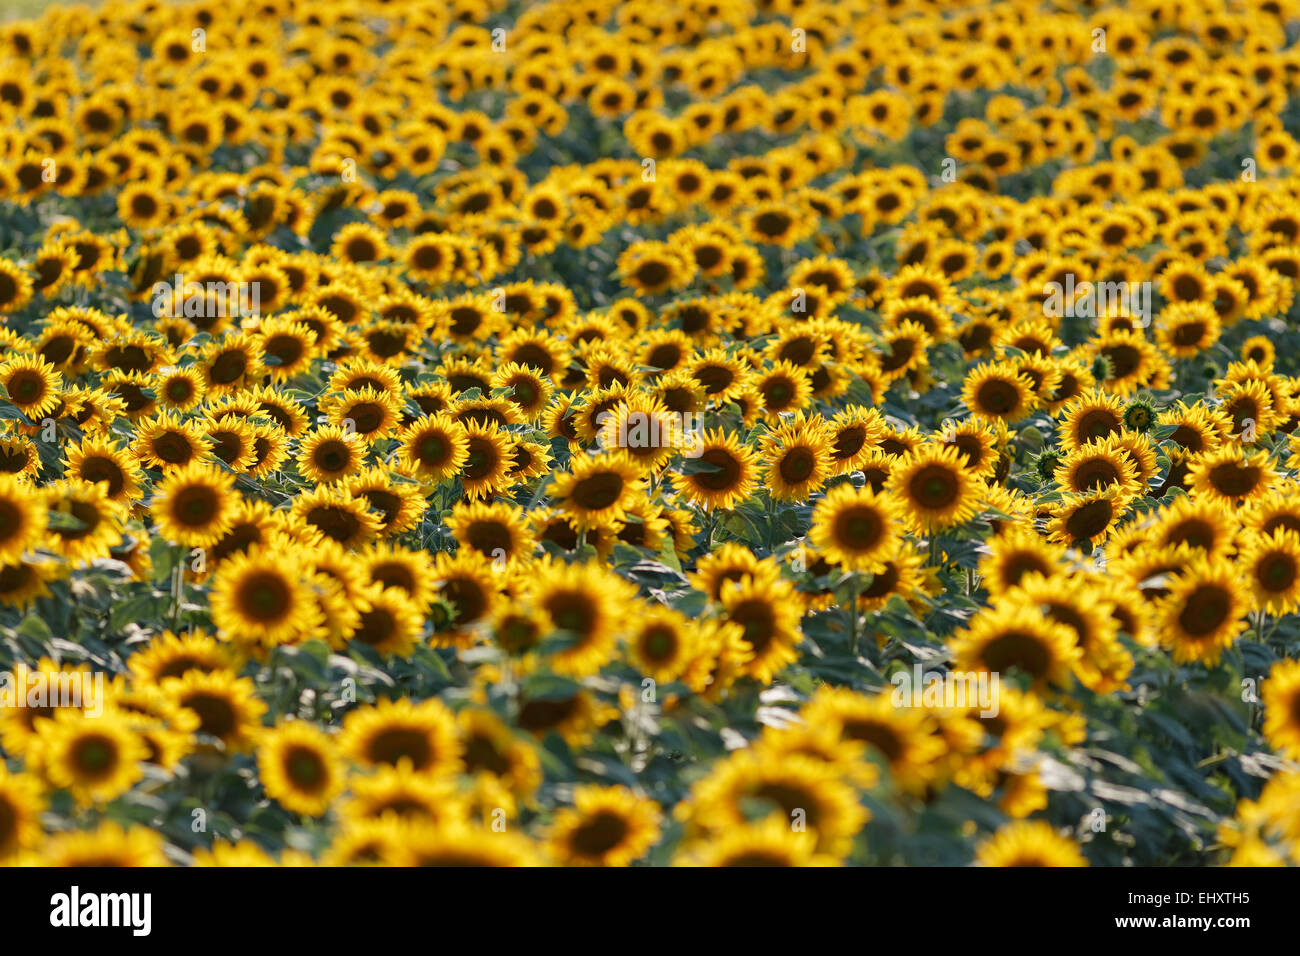 Austria, Burgenland, Oslip, sunflower field Stock Photo